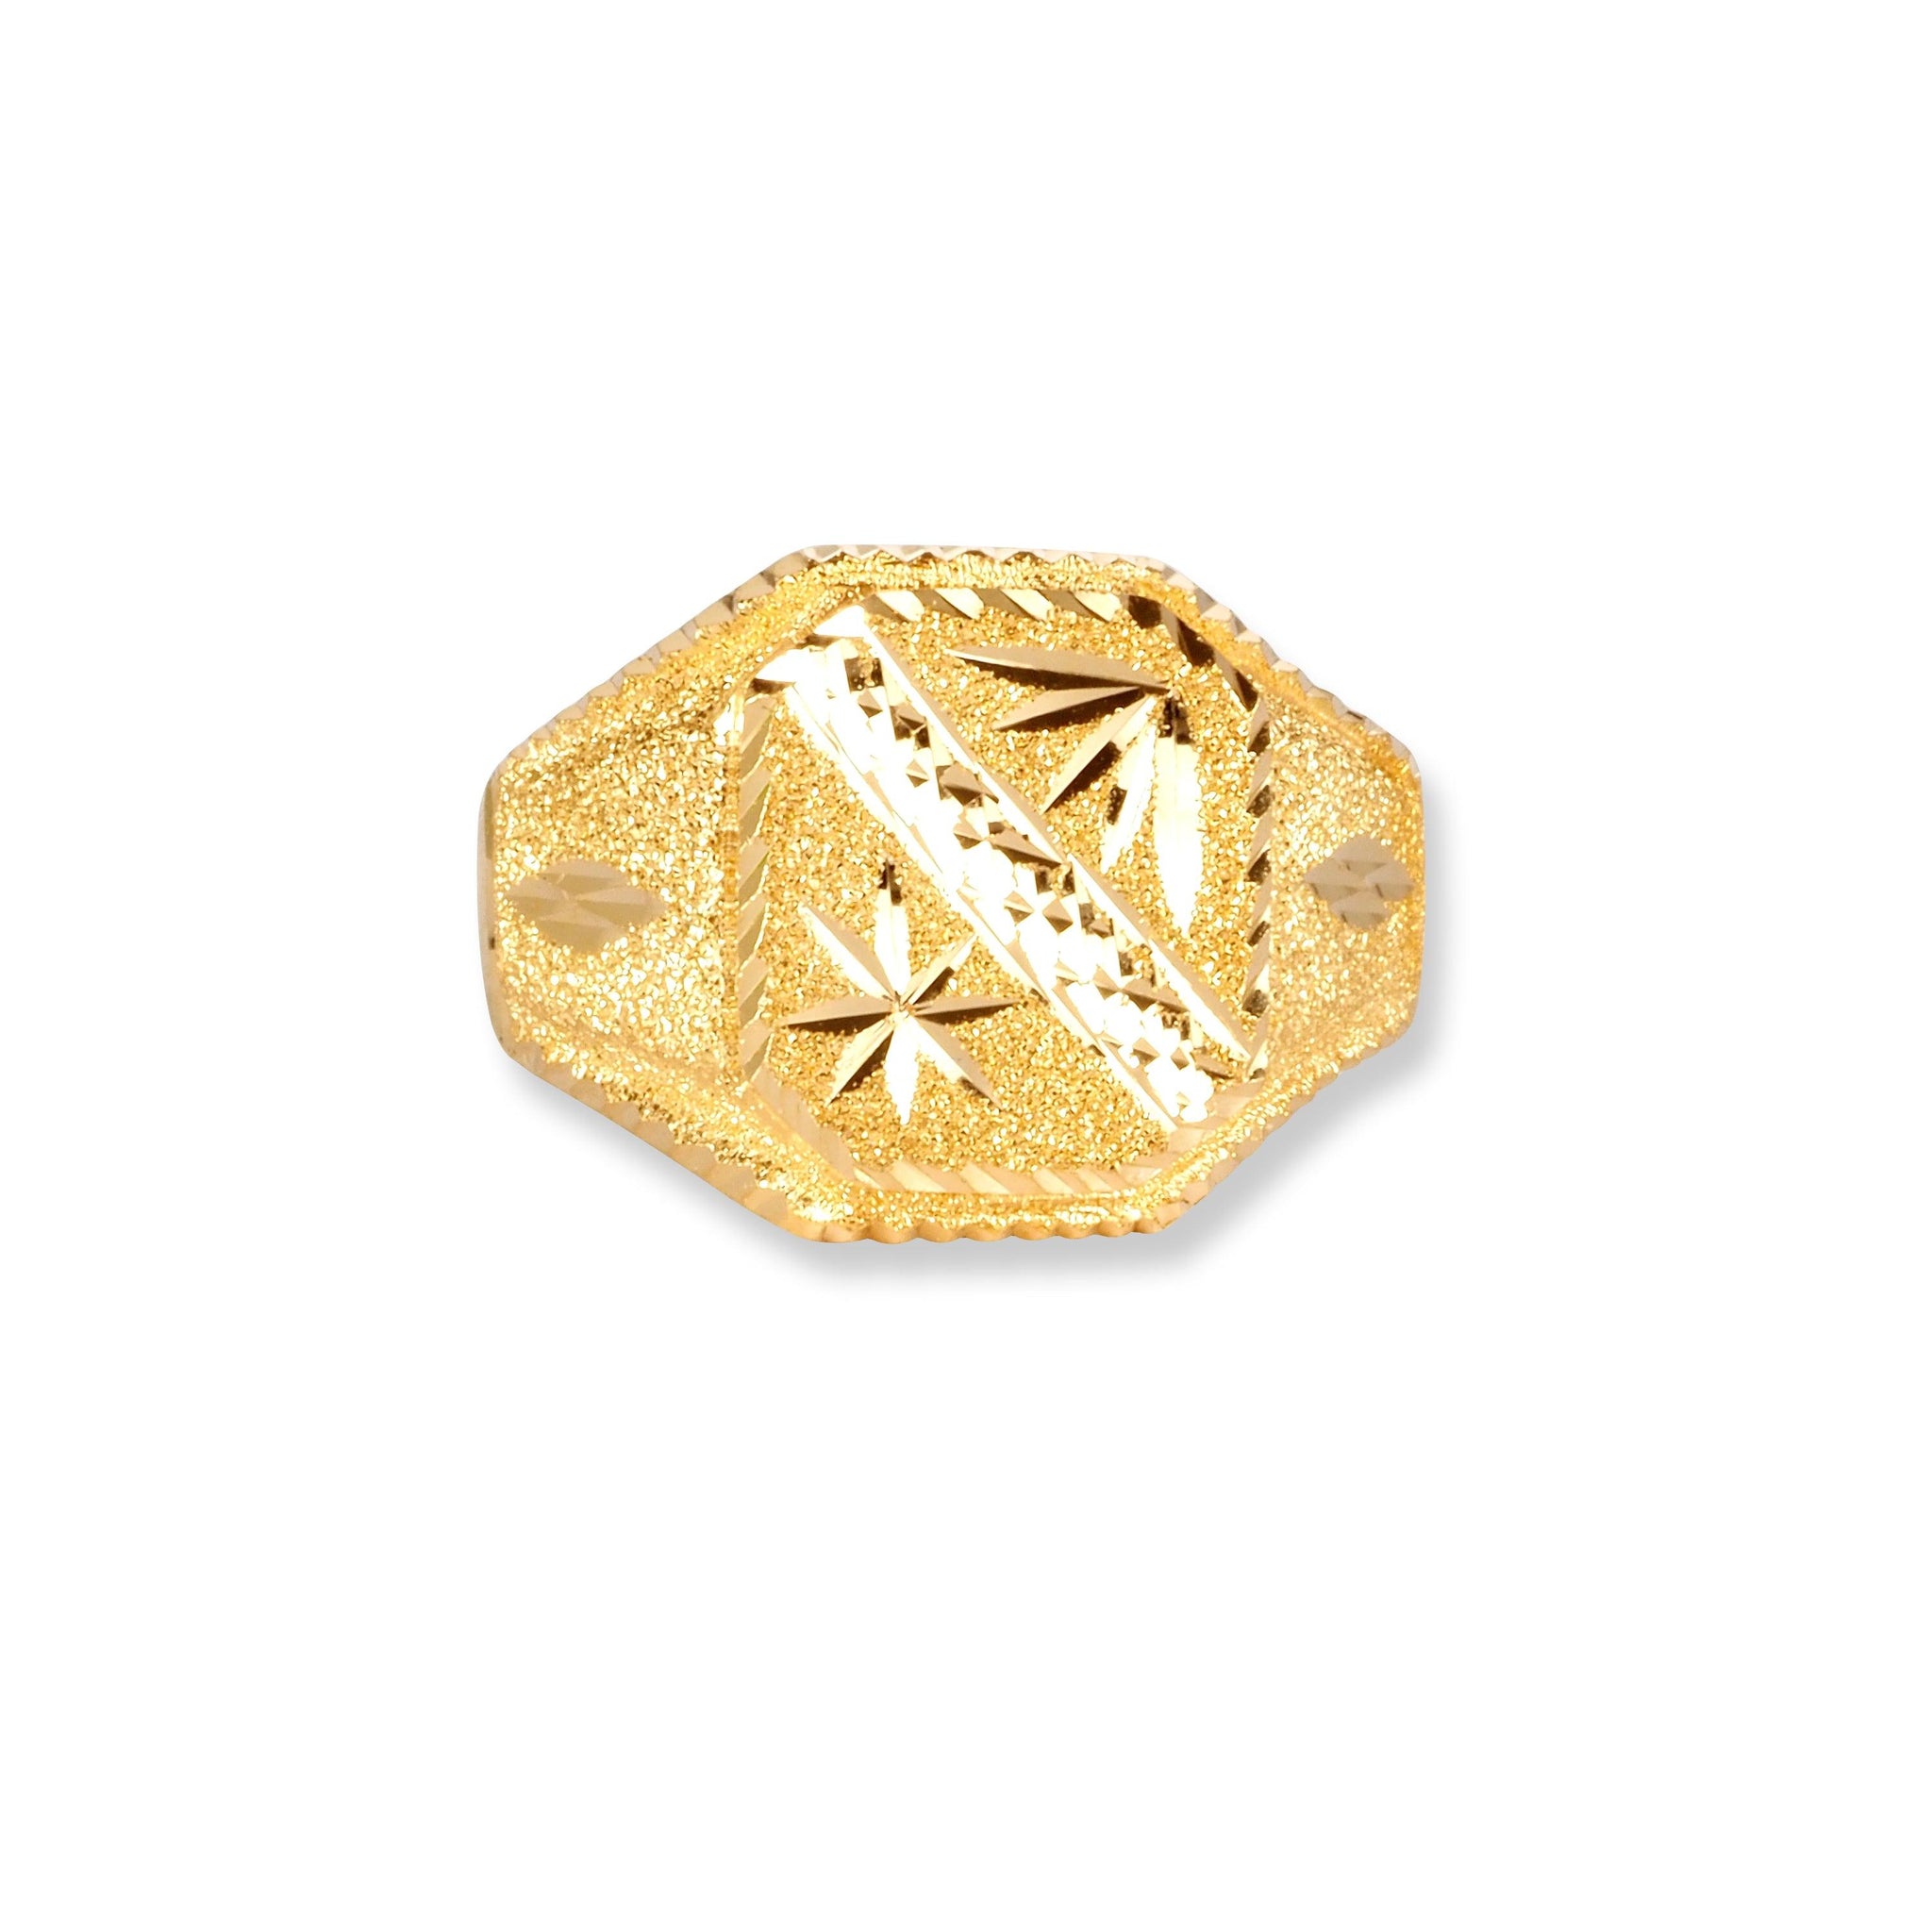 22ct Gold Gents Signet Ring GR-8319